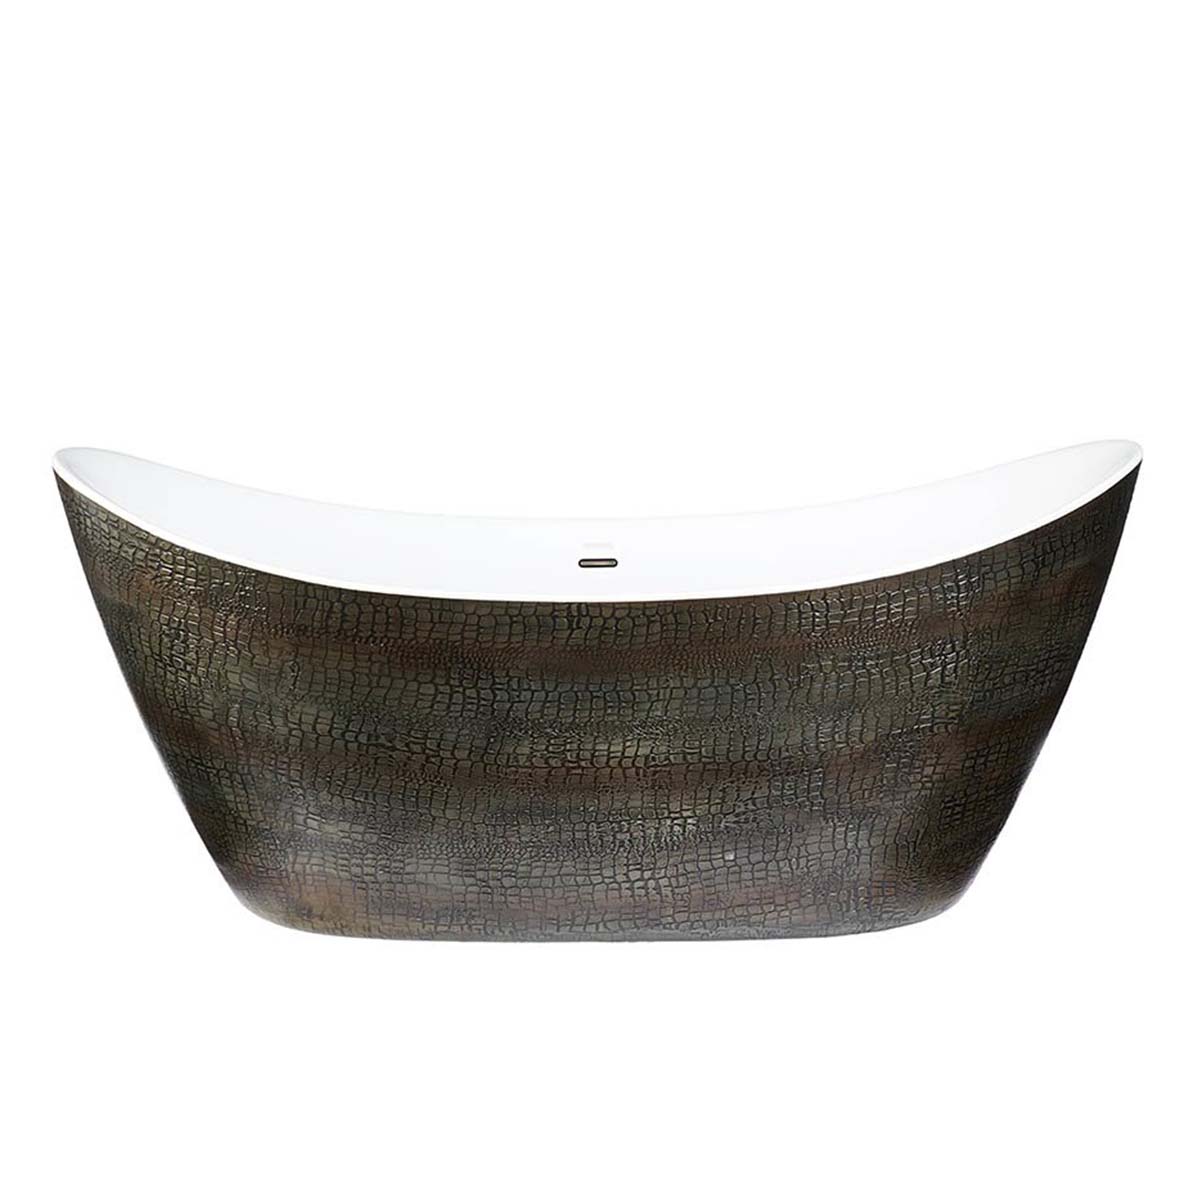 Granlusso d'Lusso Nova Double Slipper Freestanding Bath Acrylic